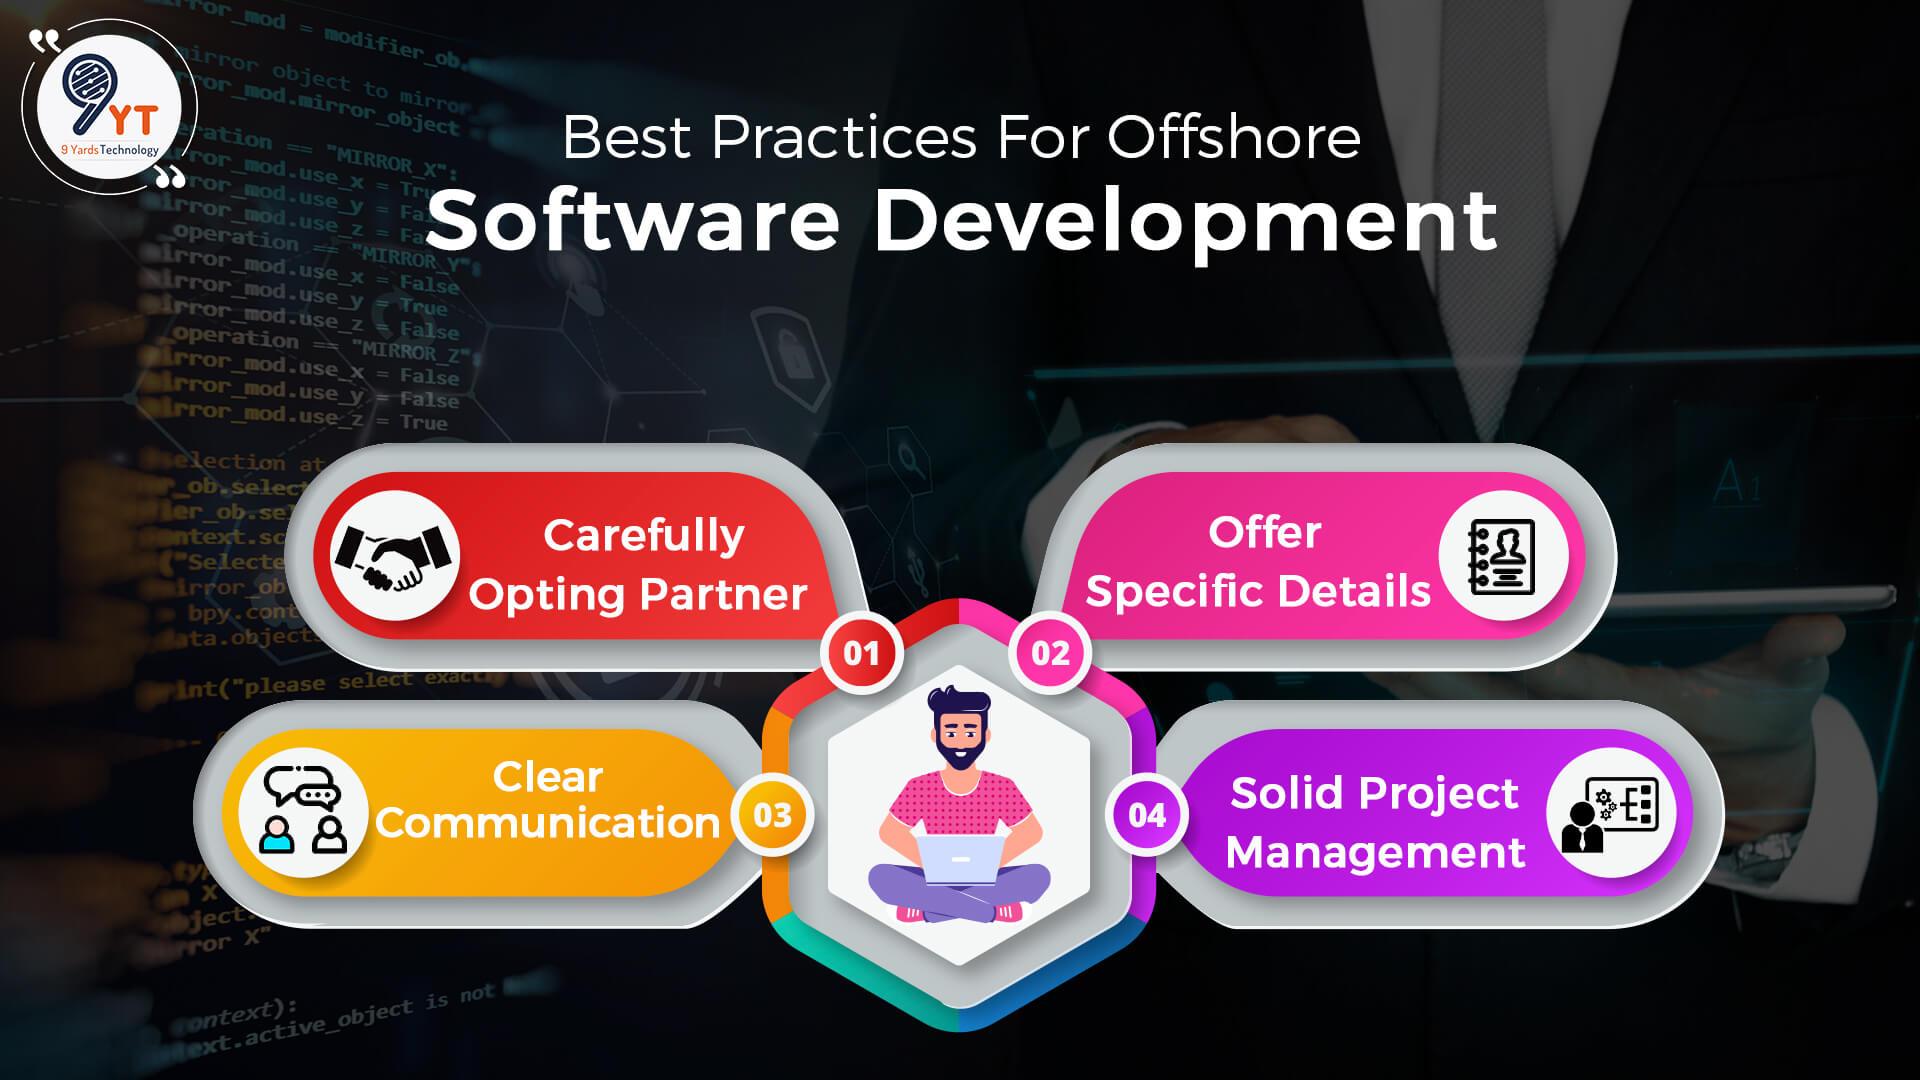 offshore-software-development